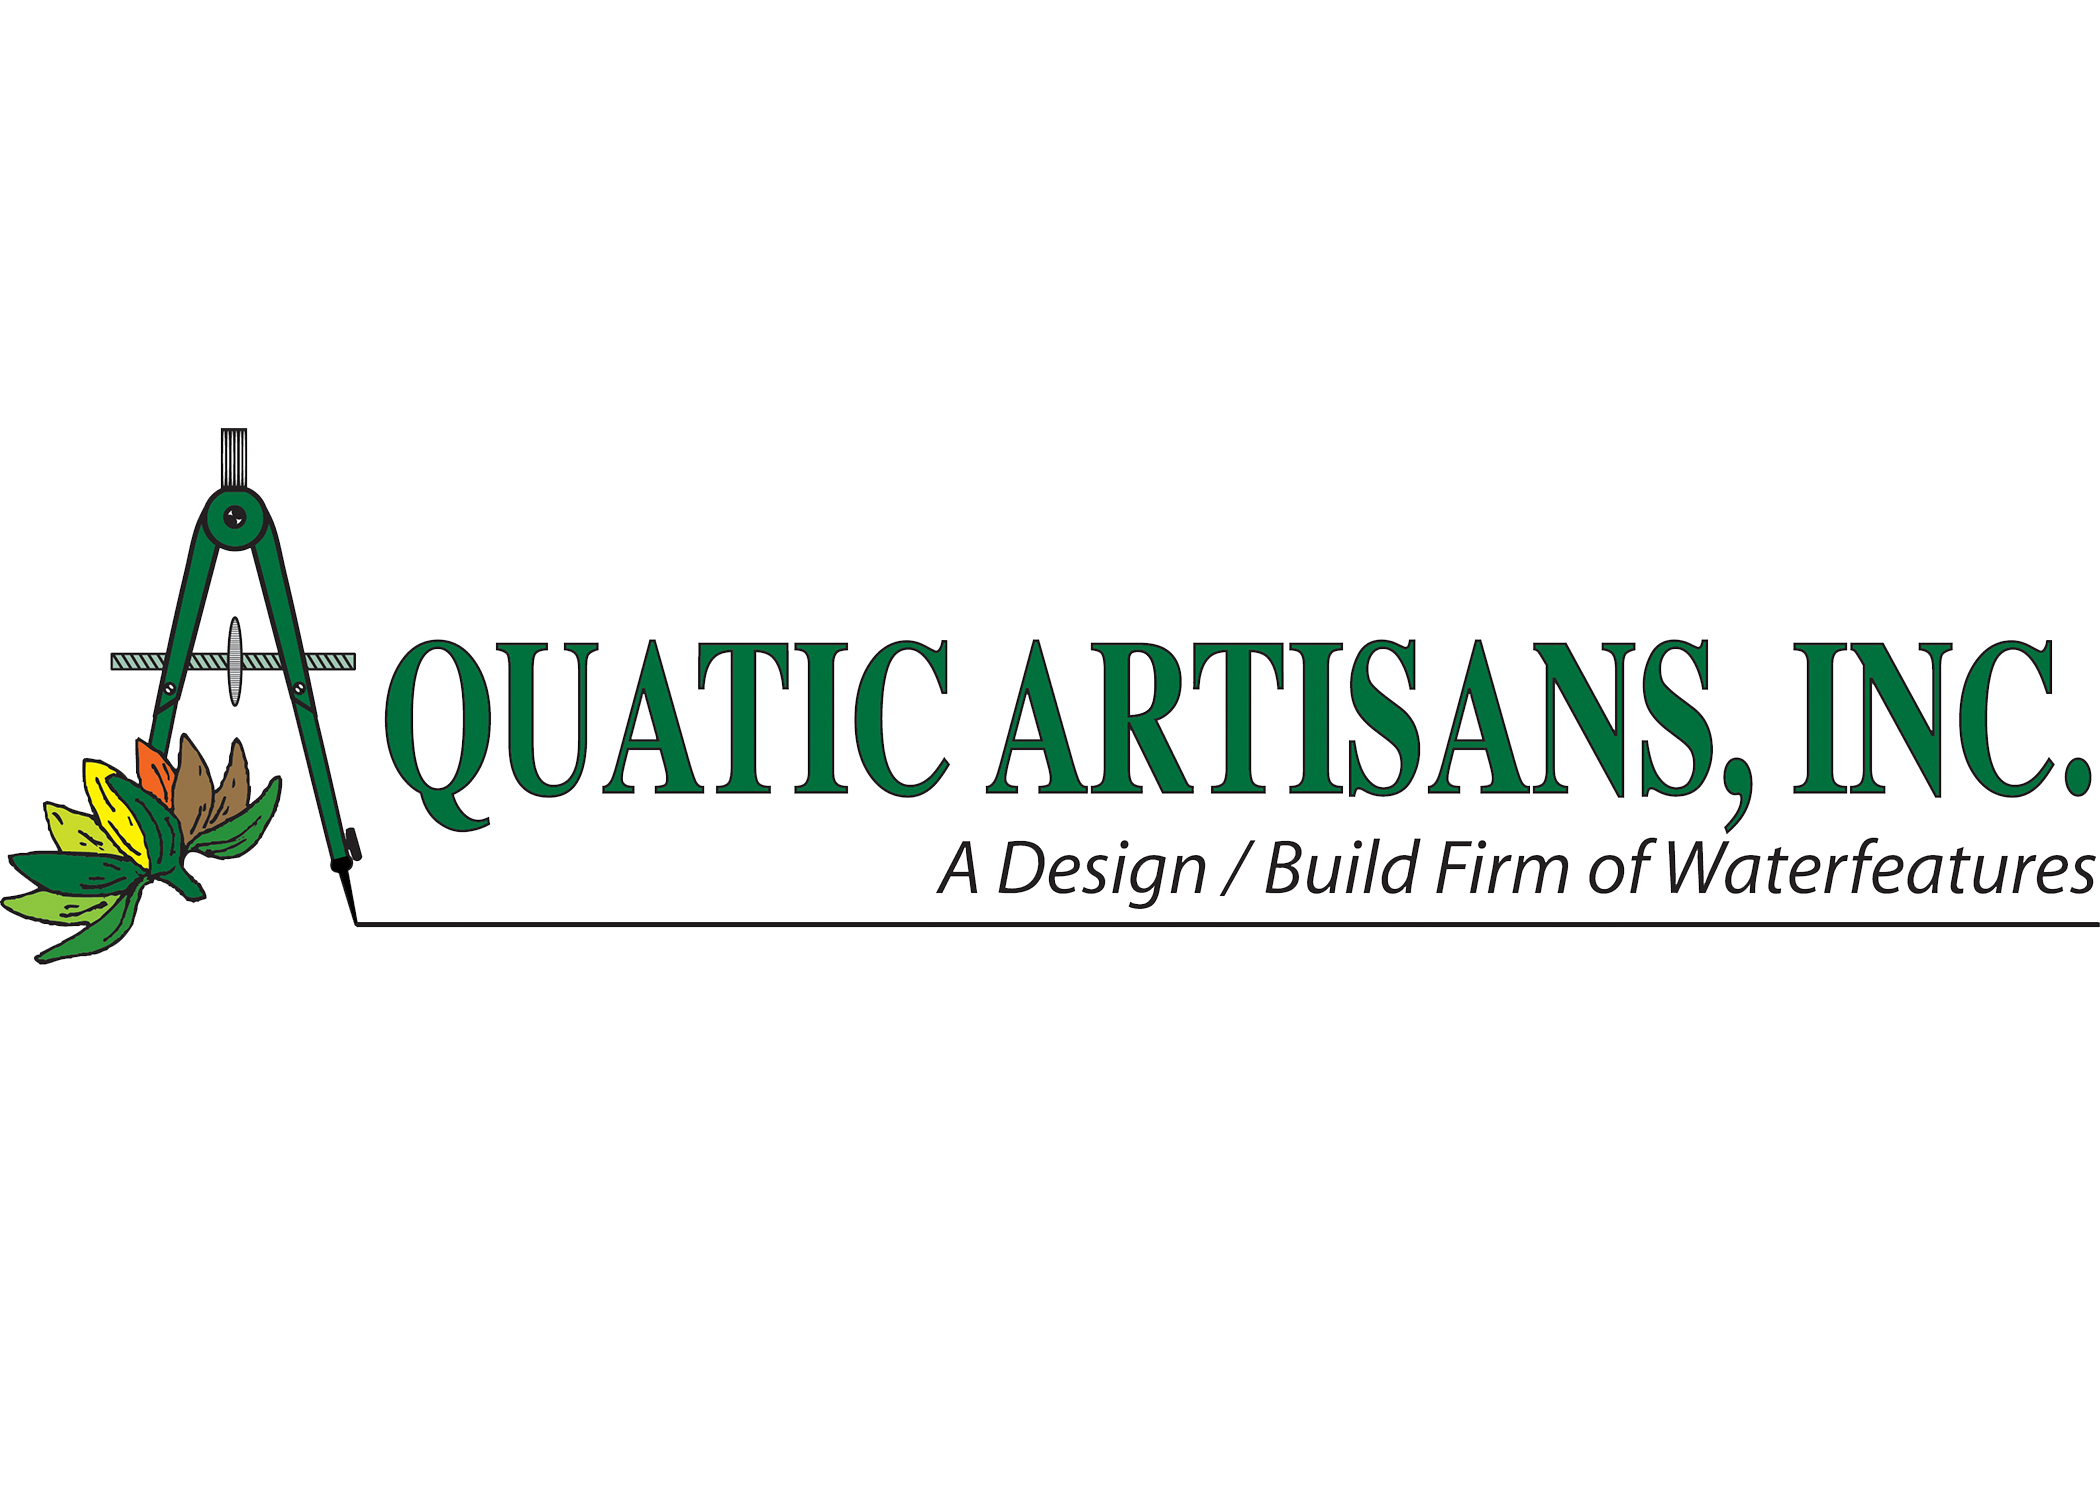 Aquatic Artisans Inc. LOGO Transparent1